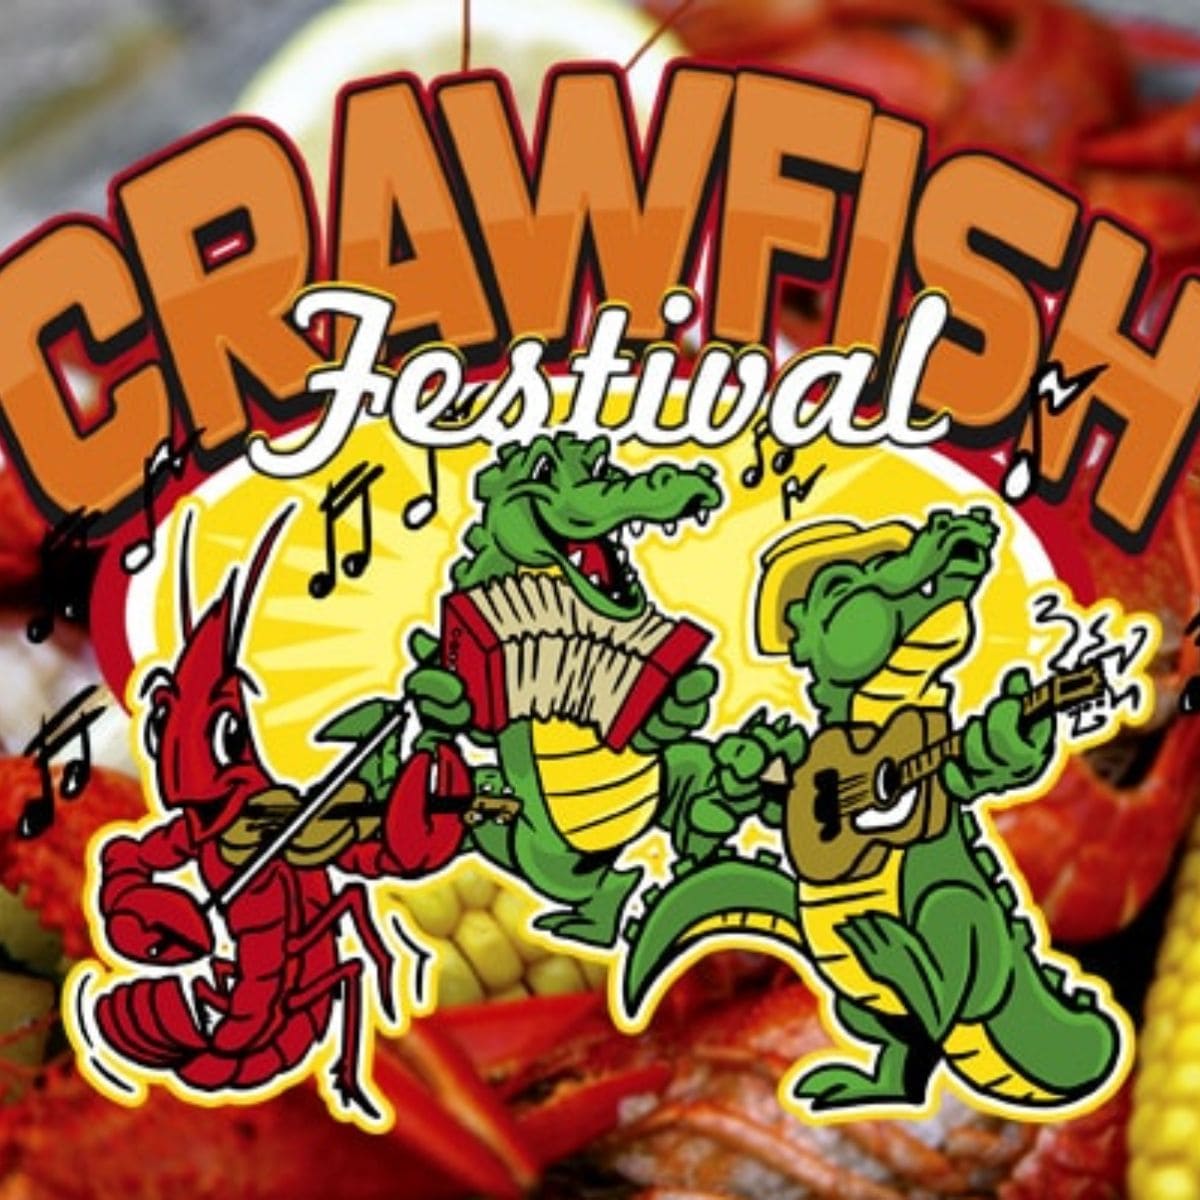 The Crawfish Festival